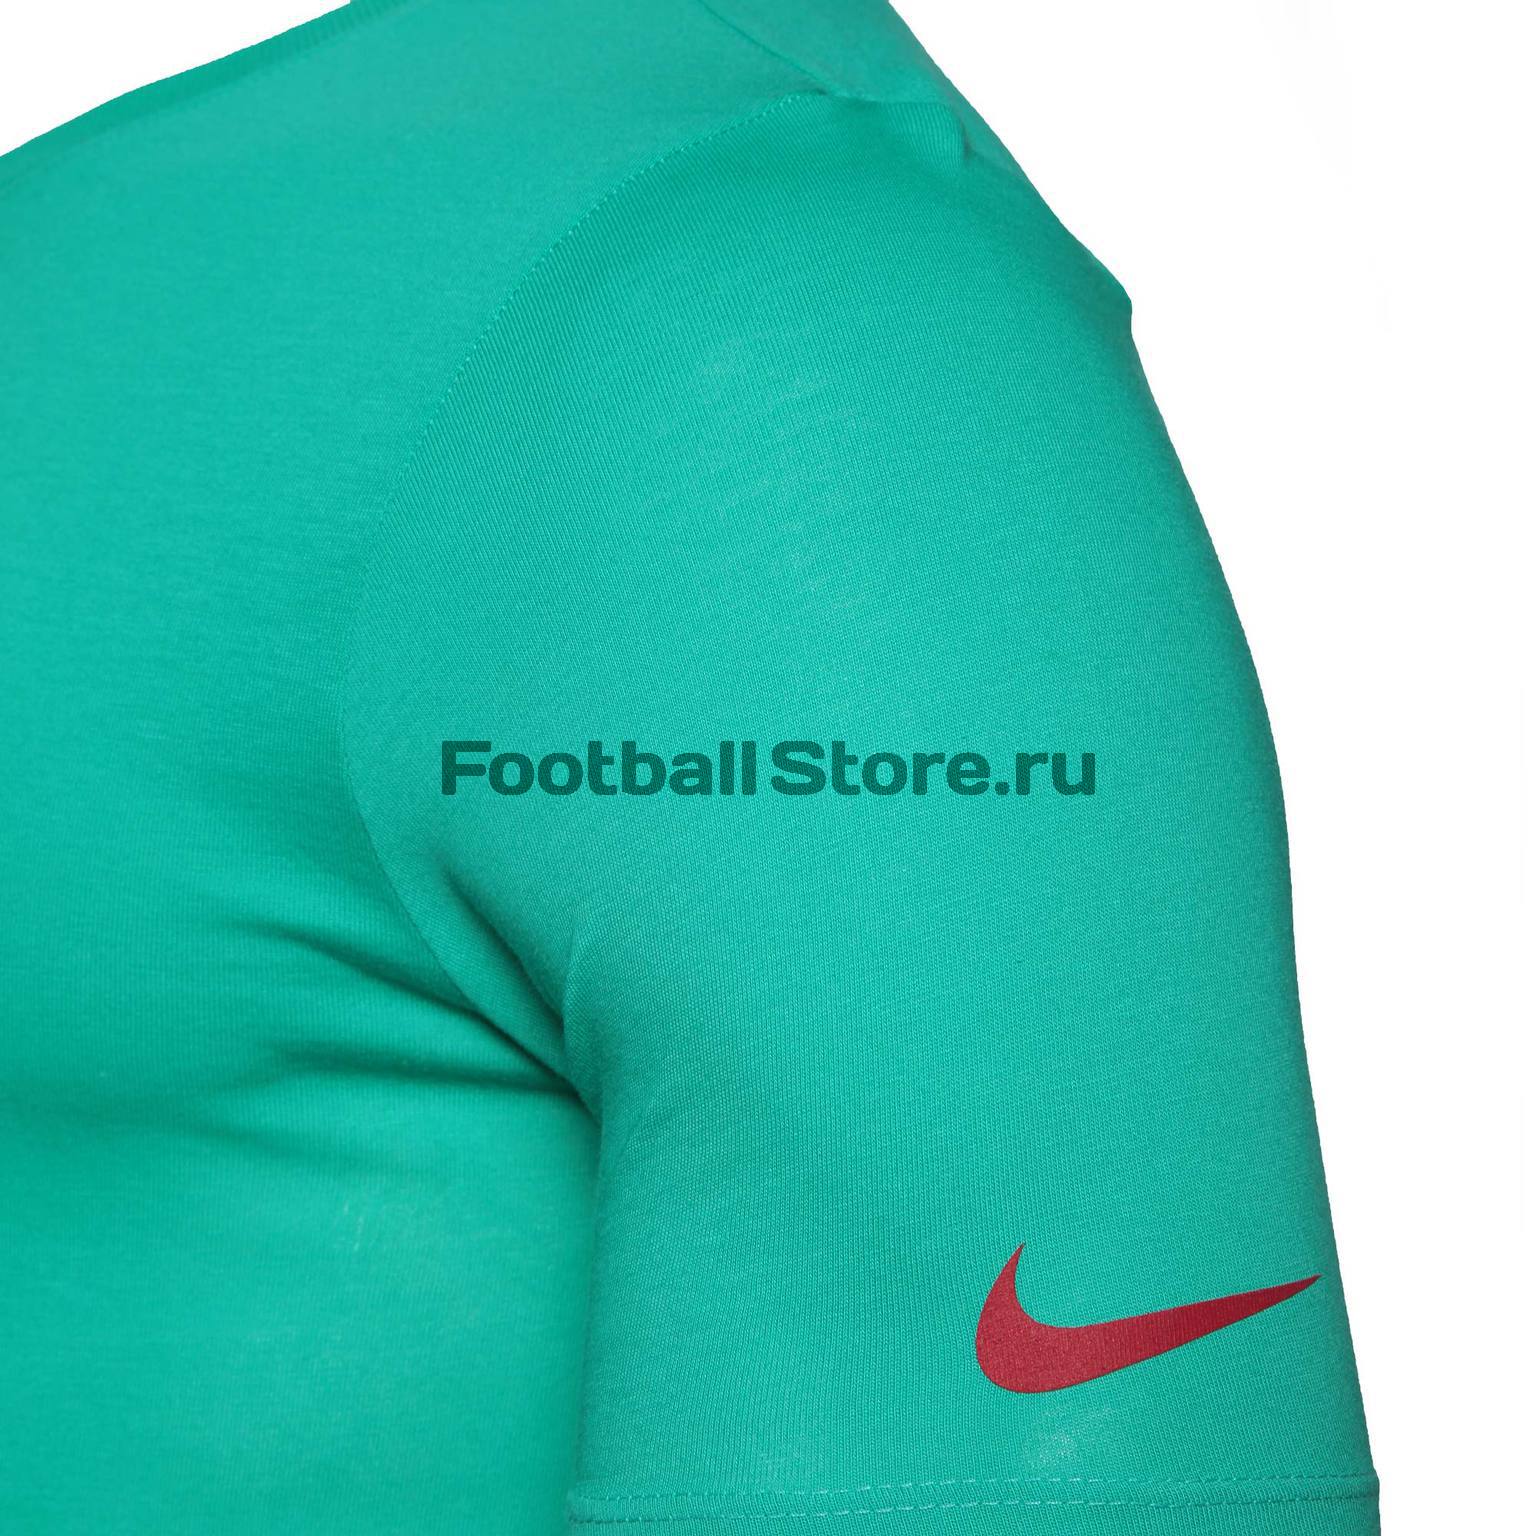 Футболка Nike сб. Португалии 909843-348